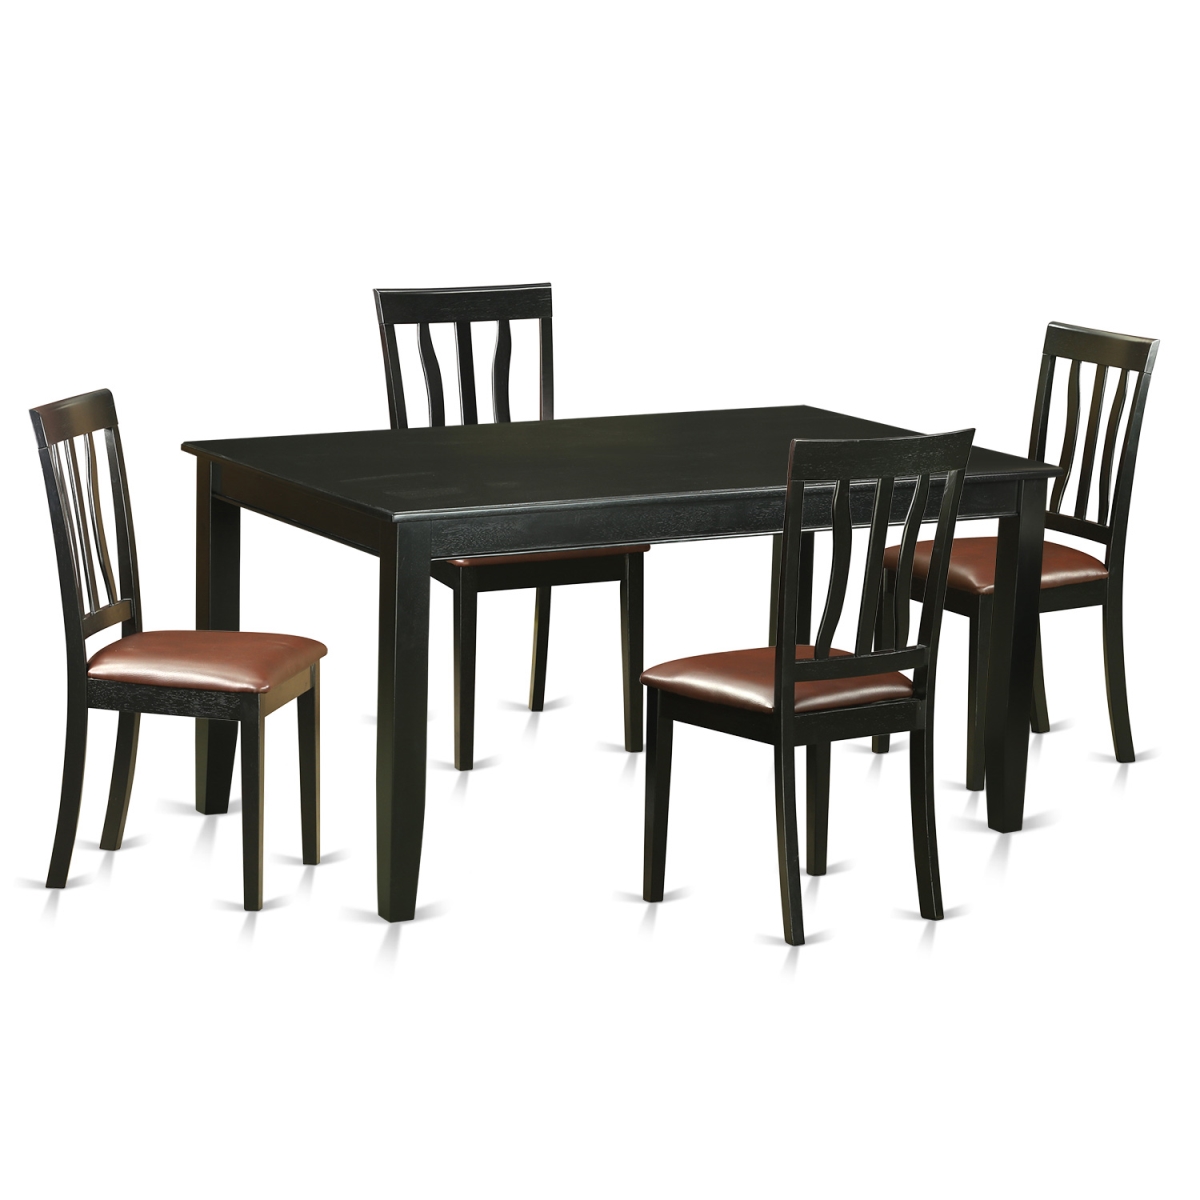 Dinette Set - Table & 4 Chairs, Black - 5 Piece